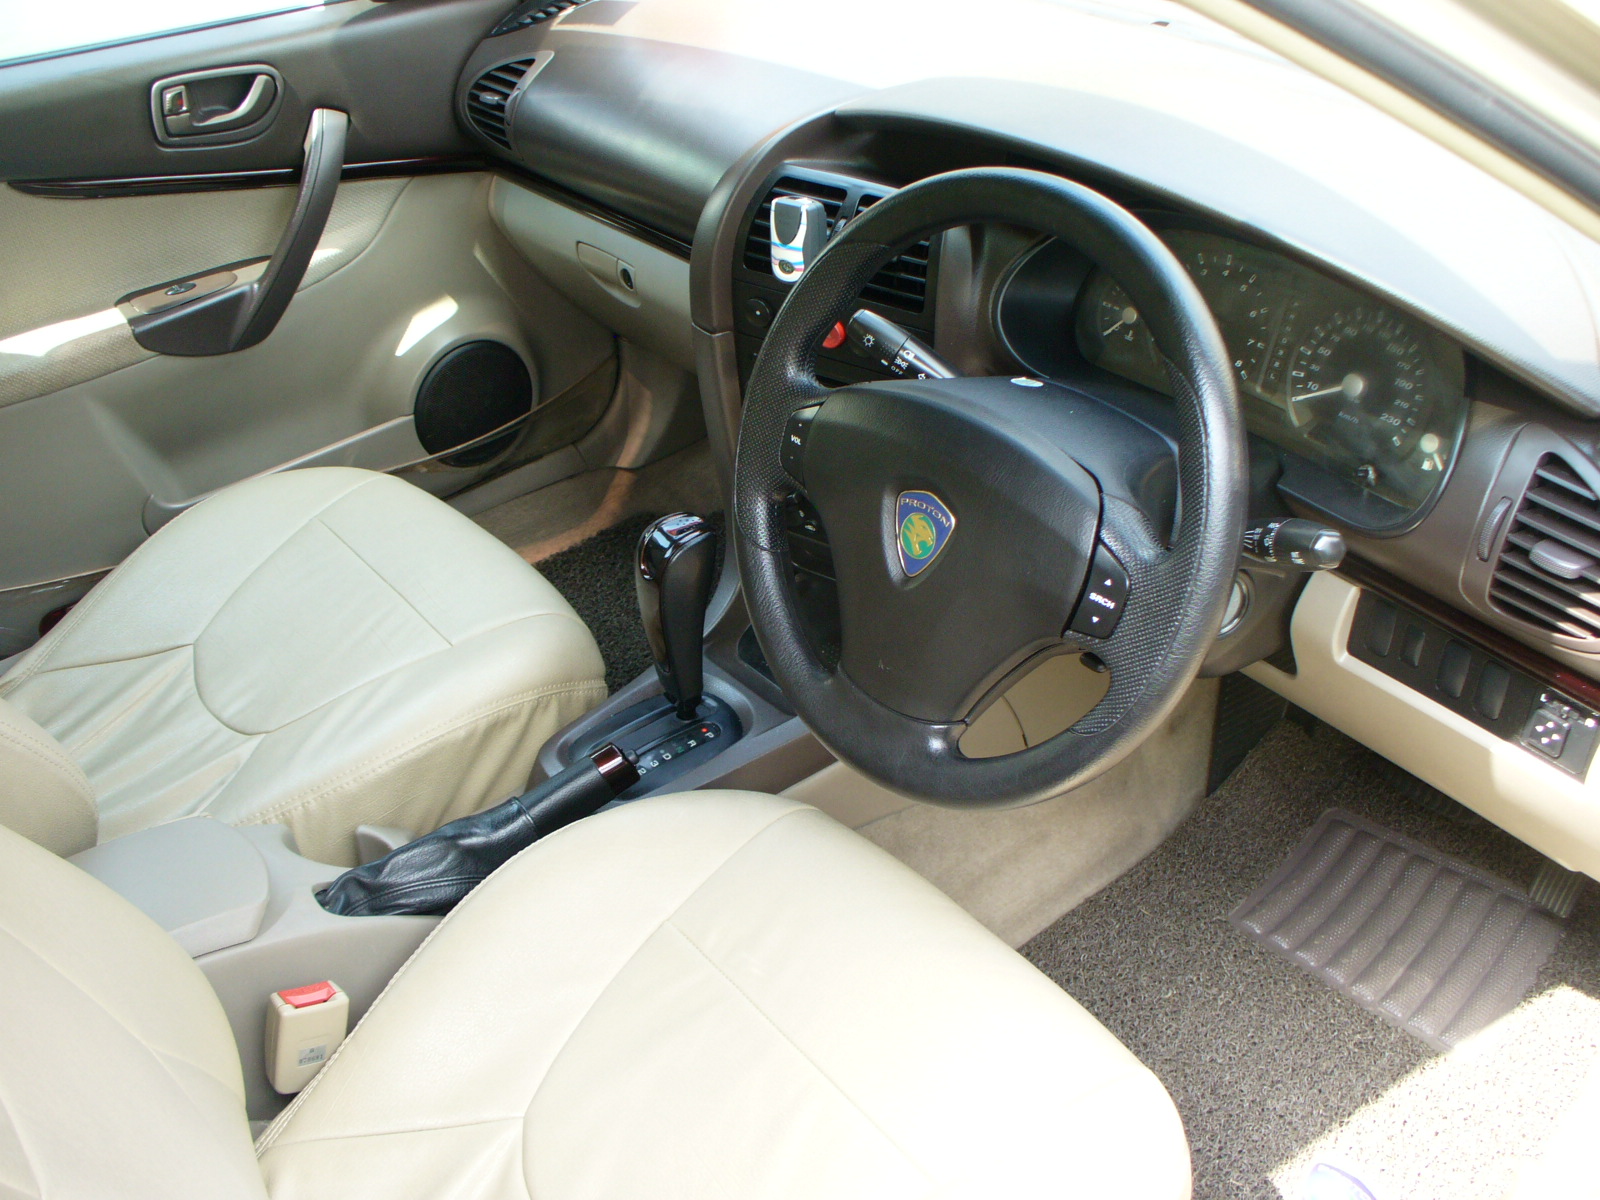 Stream Used Car: Proton Waja 1.6 Auto 2001 WMV